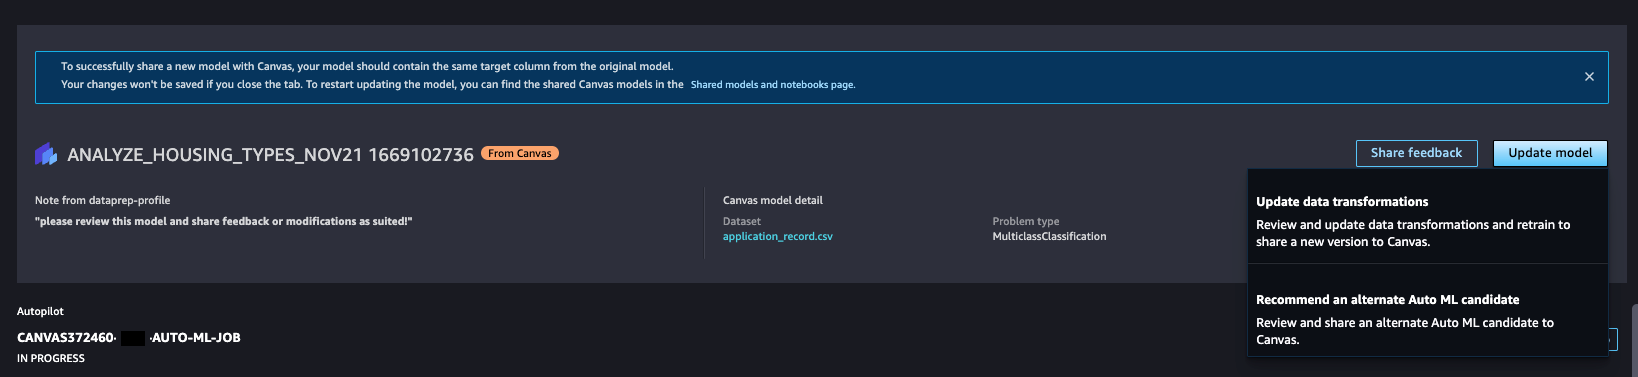 Studio Classic 中模型详细信息页面顶部的横幅屏幕截图，其中显示了共享新模型的按钮。